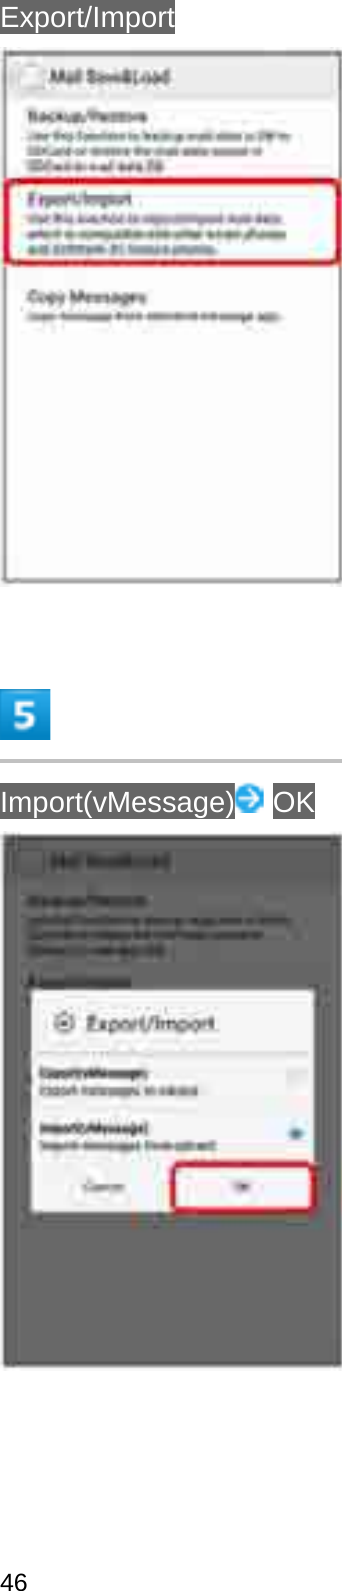 Export/ImportImport(vMessage) OK46